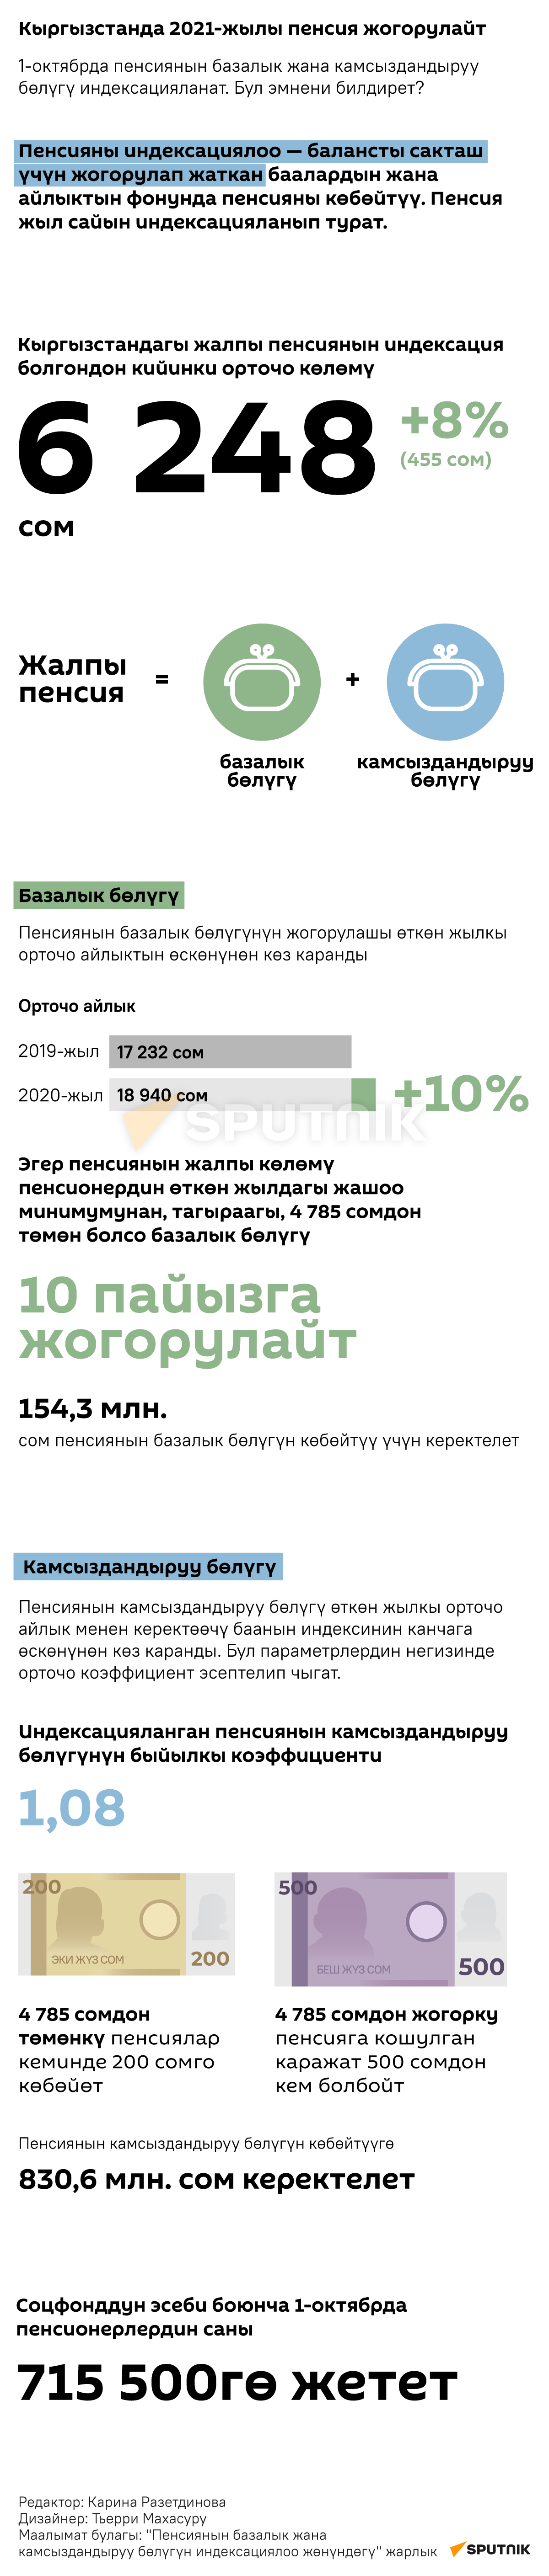 Кыргызстанда 2021-жылы пенсия жогорулайт  - Sputnik Кыргызстан, 1920, 14.09.2021